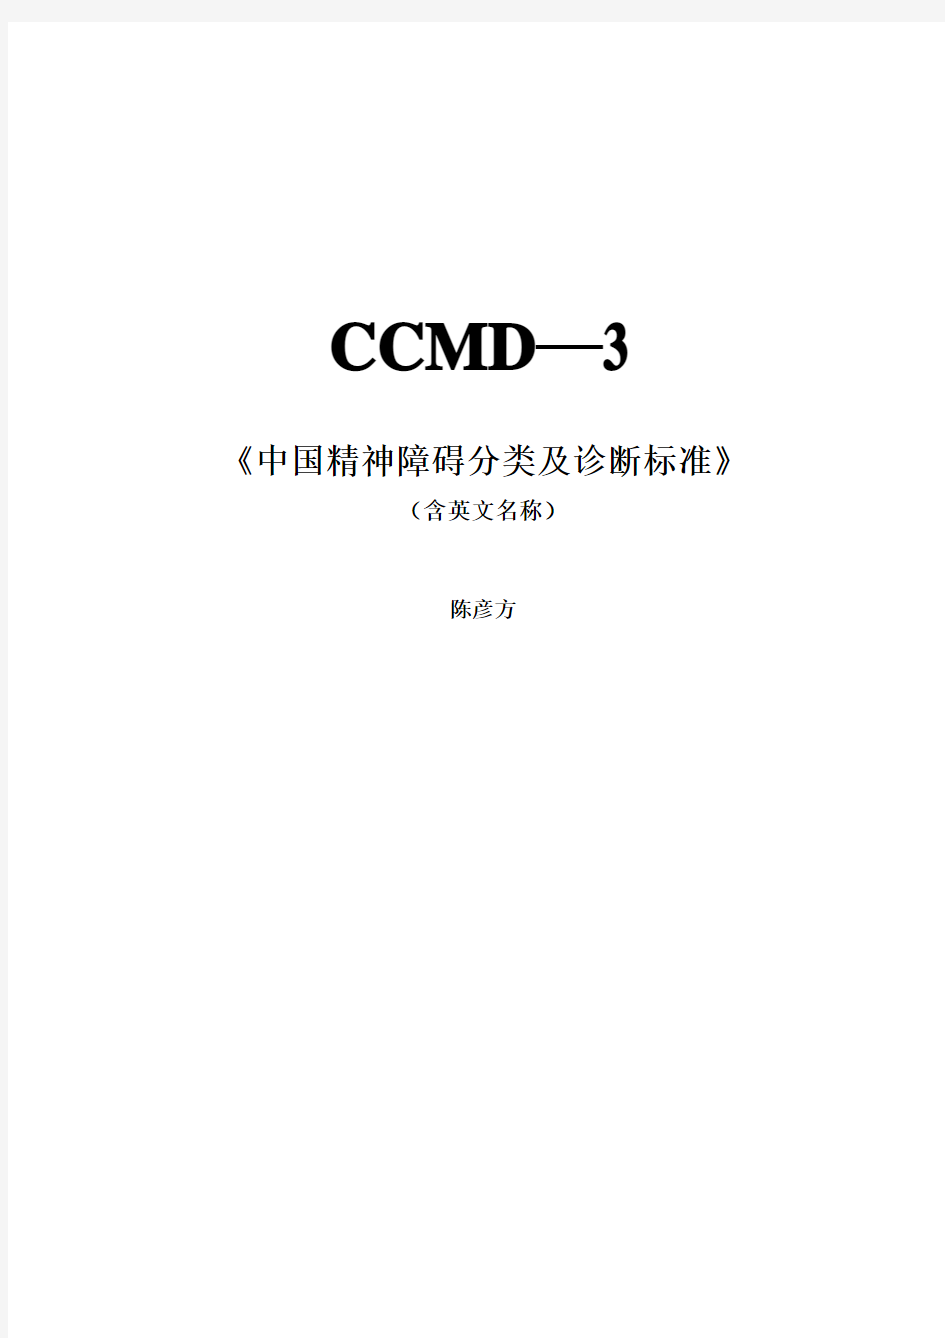 CCMD3中国精神障碍分类及诊断标准(含英文名称)